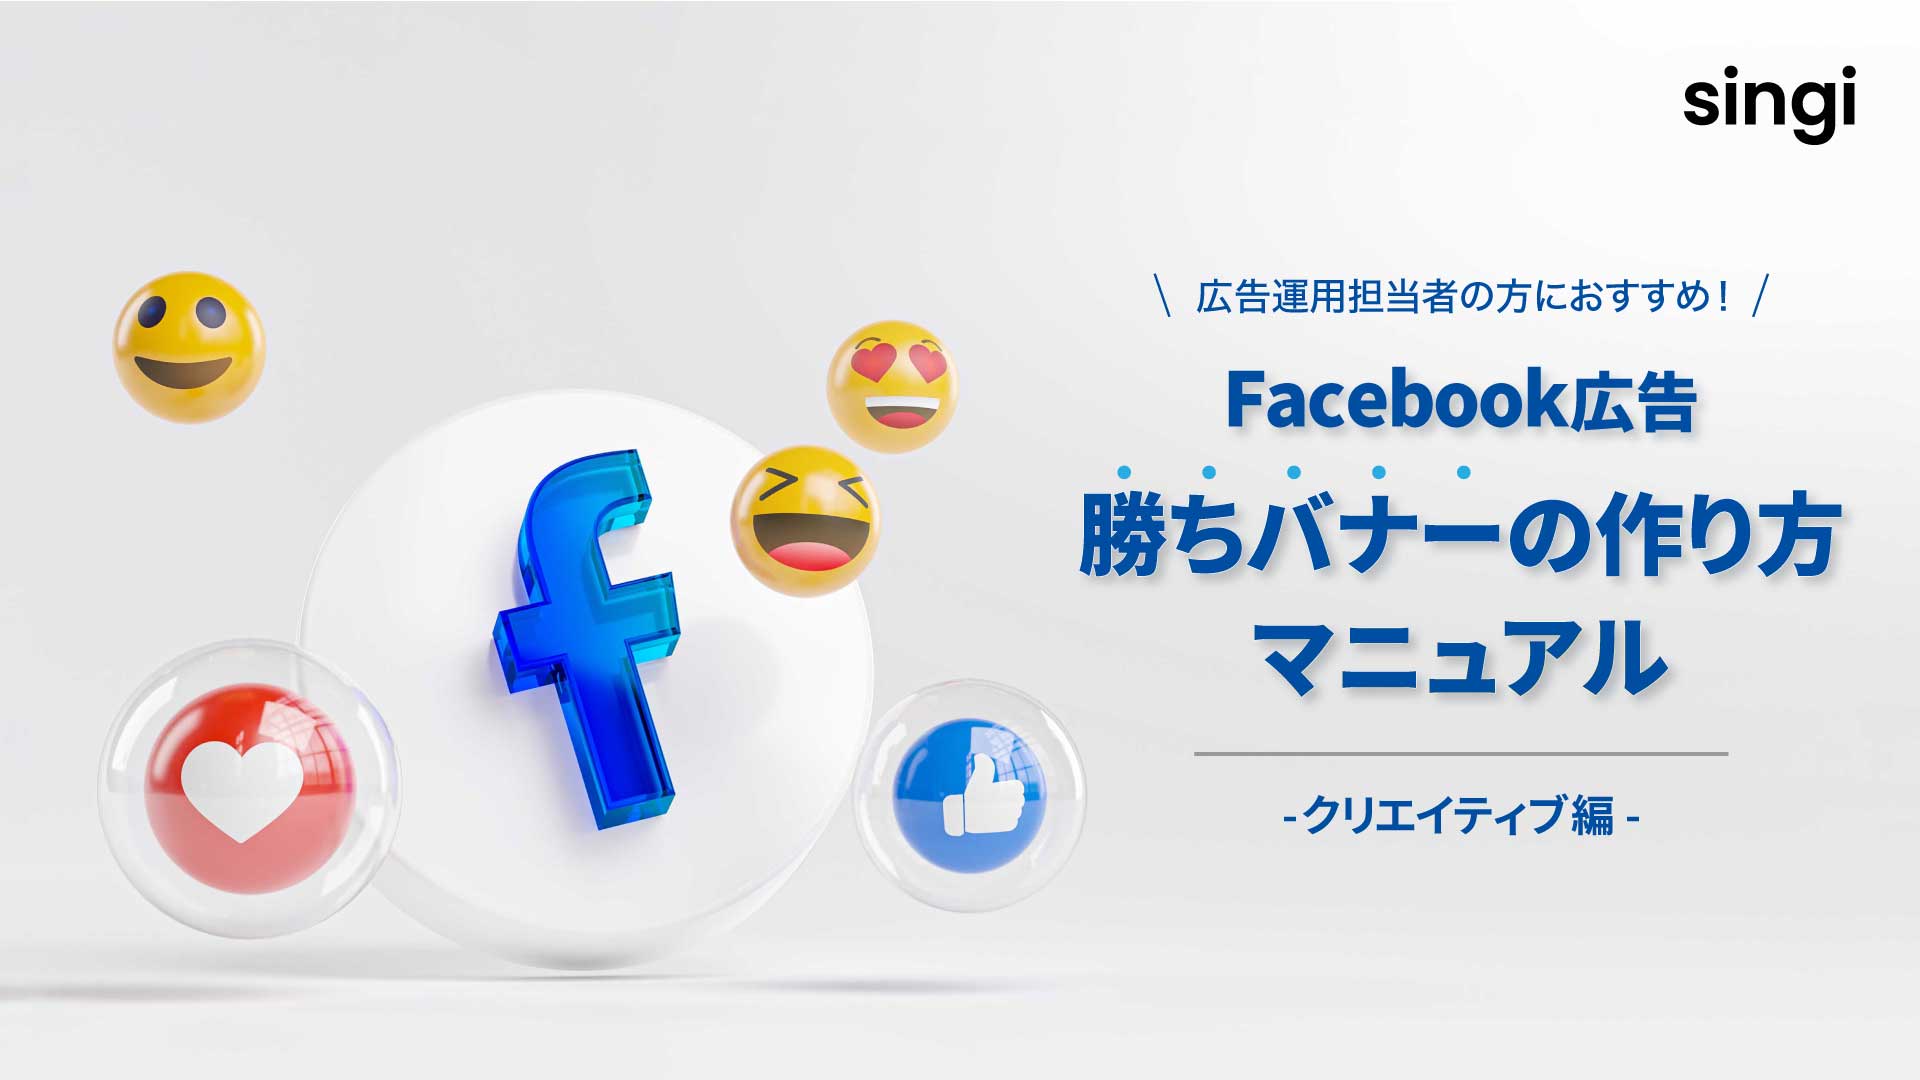 Facebook広告 勝ちバナーの作り方マニュアル-クリエイティブ編-